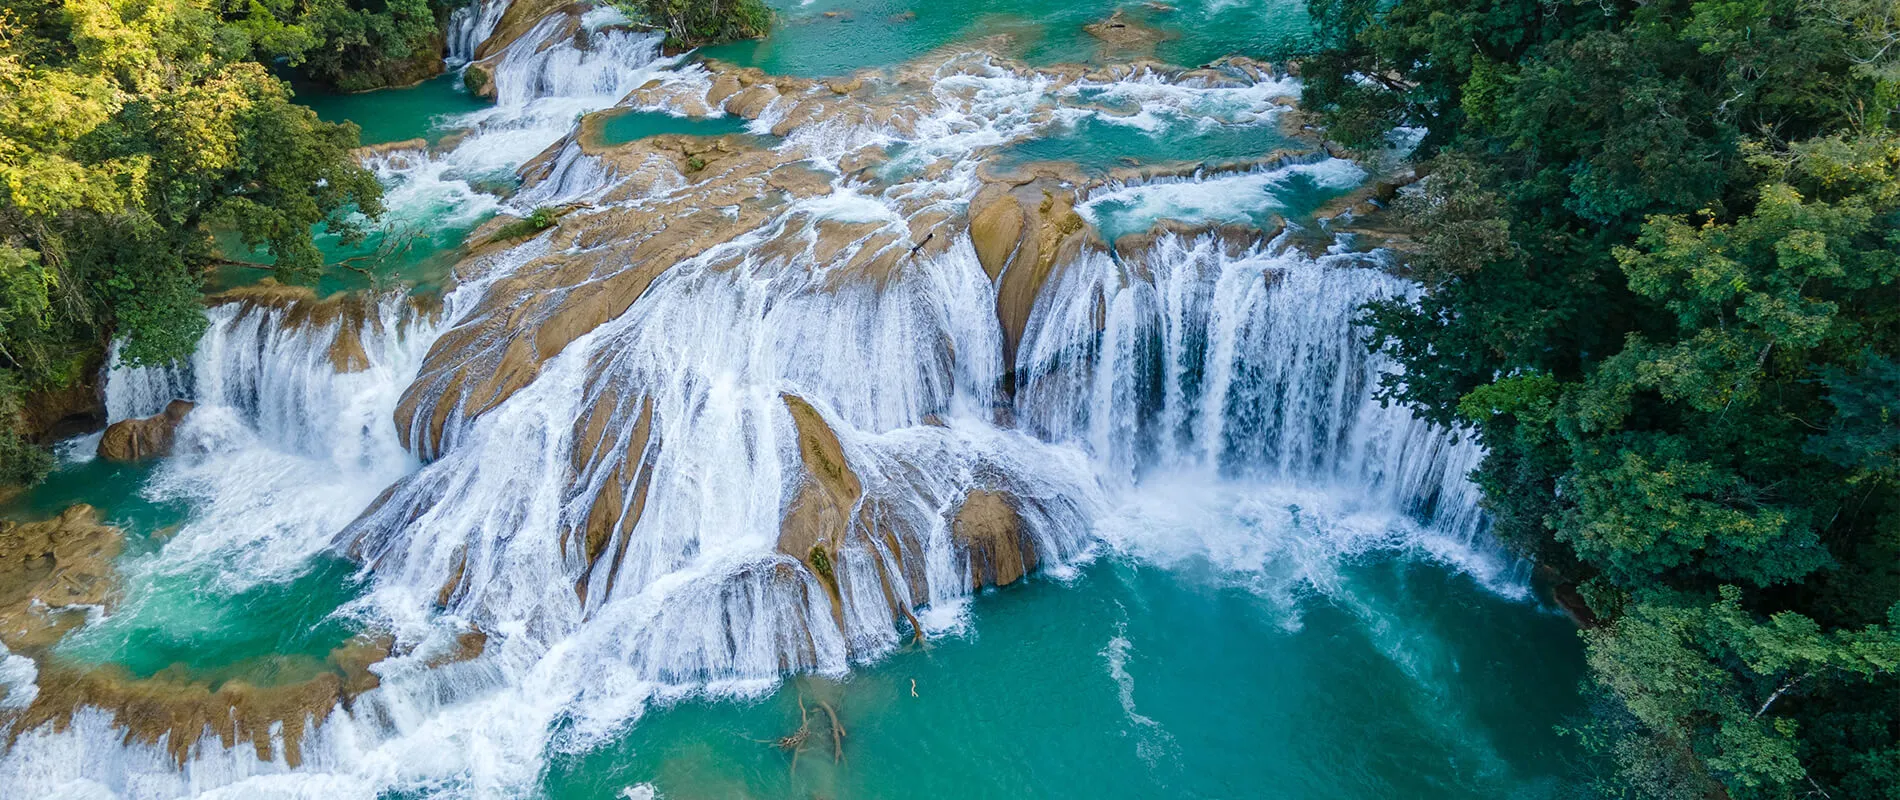 Cascadas de Agua Azul in Mexico, North America | Waterfalls - Rated 4.4